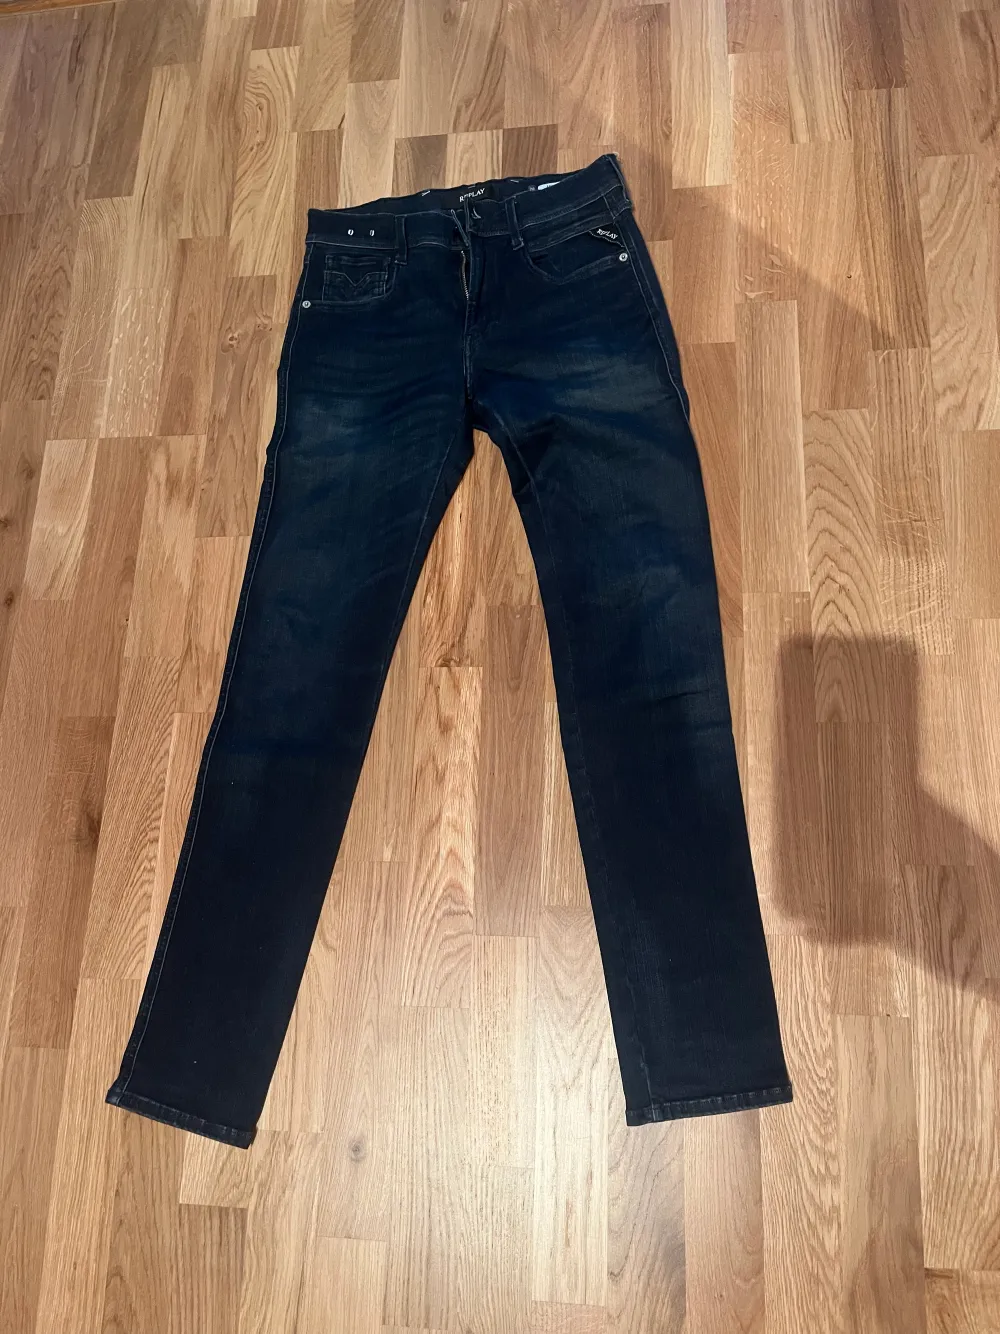 Fina jeans från Replay, pris kan diskuteras . Jeans & Byxor.